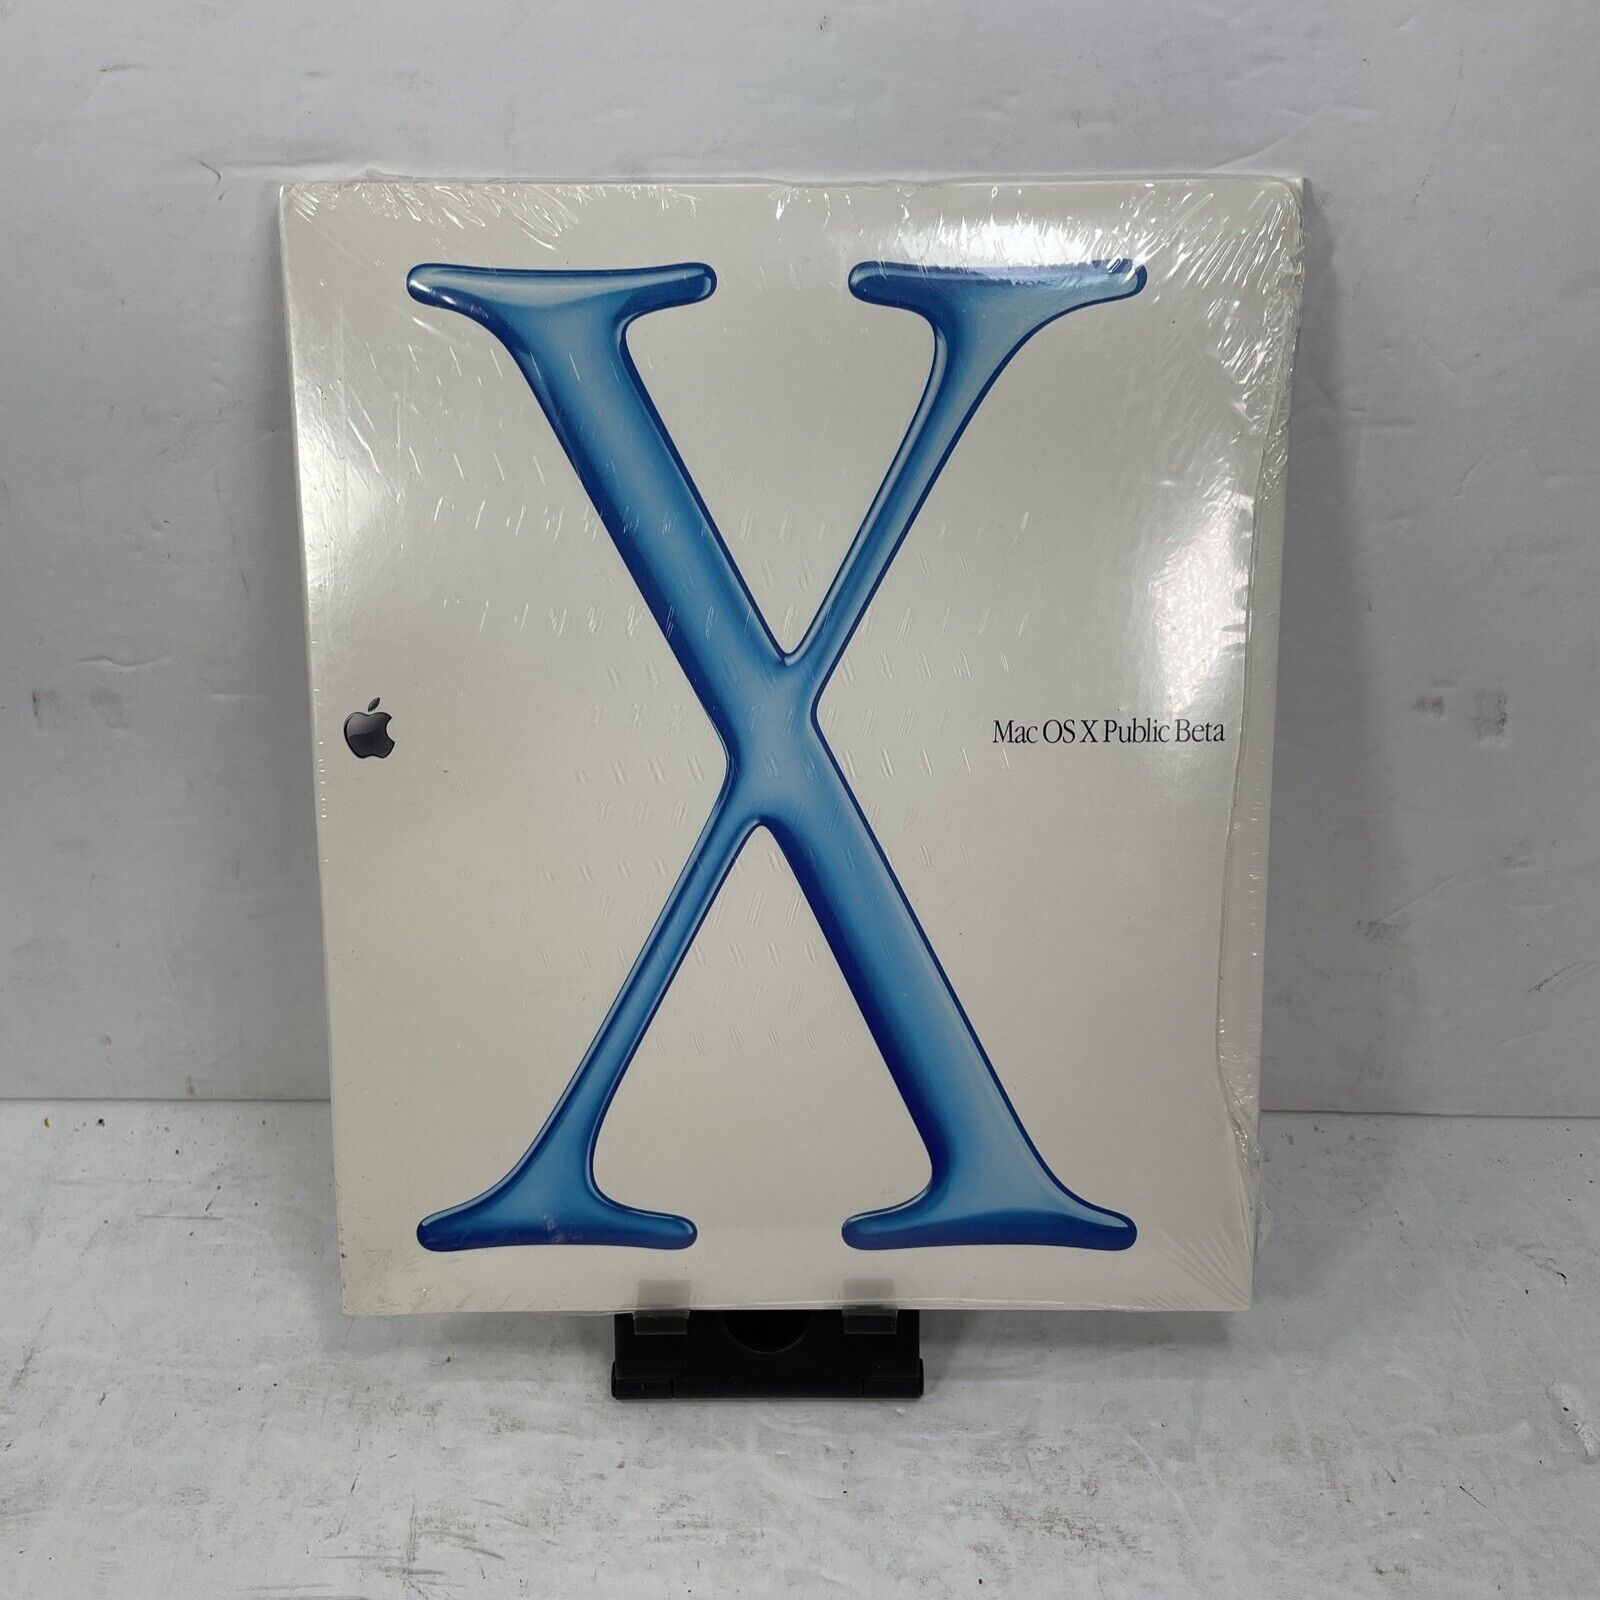 NOS Vintage 2000 Apple Mac OS X Public Beta | NEW SEALED